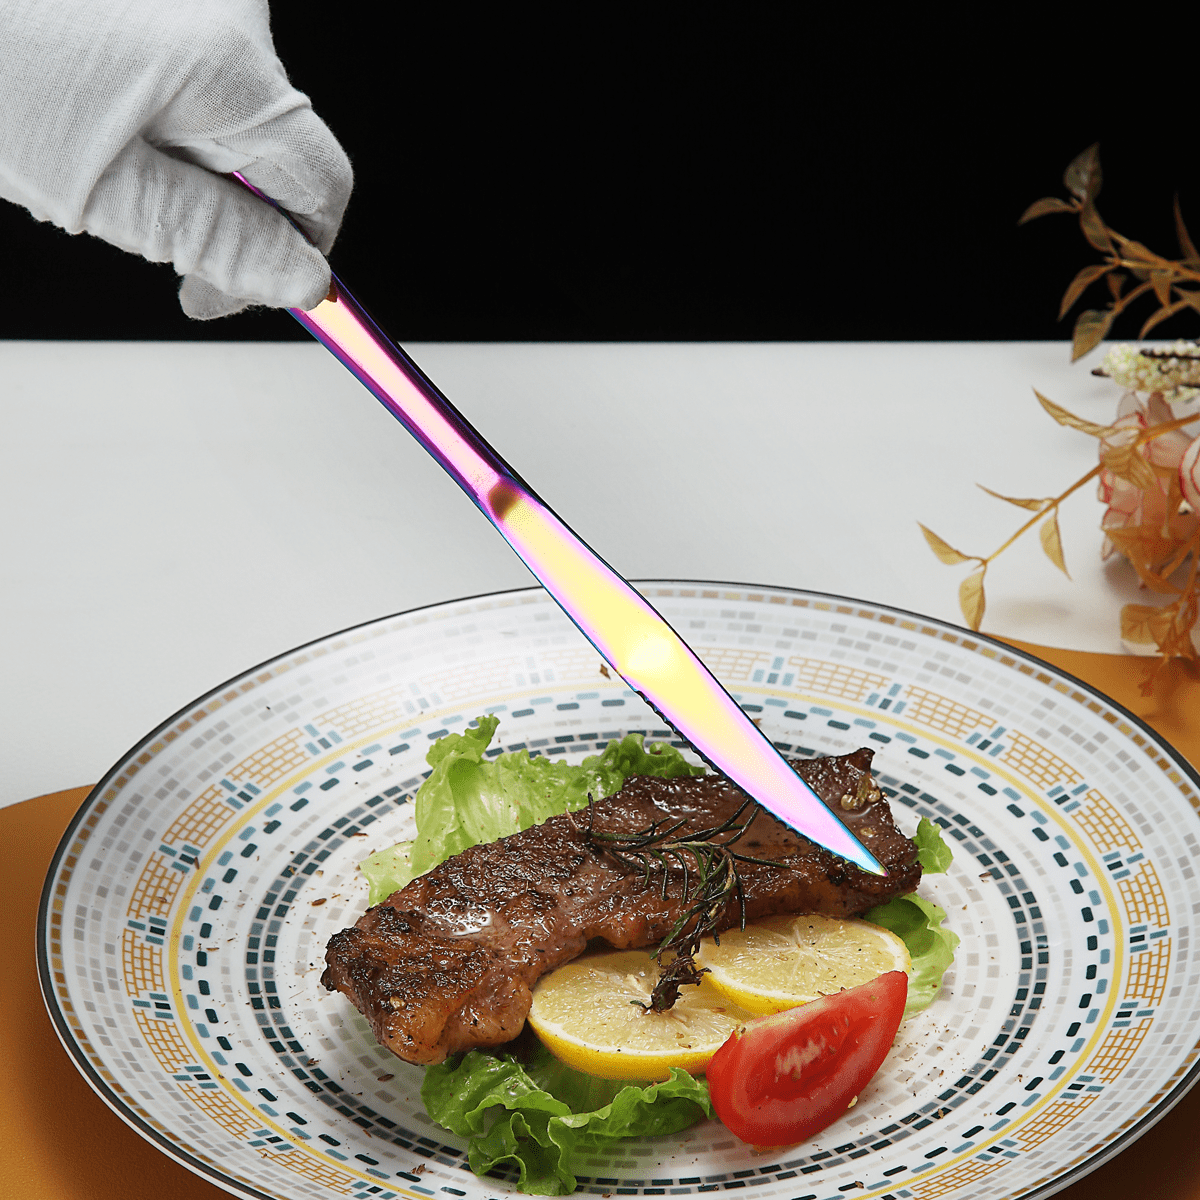 Rainbow Steak Knife Set, Kyrtaon Colorful Serrated Knife, Titanium  Mutil-color Plating Stainless Steel Sharp Knives Set, Dinner Knifes Set of  4